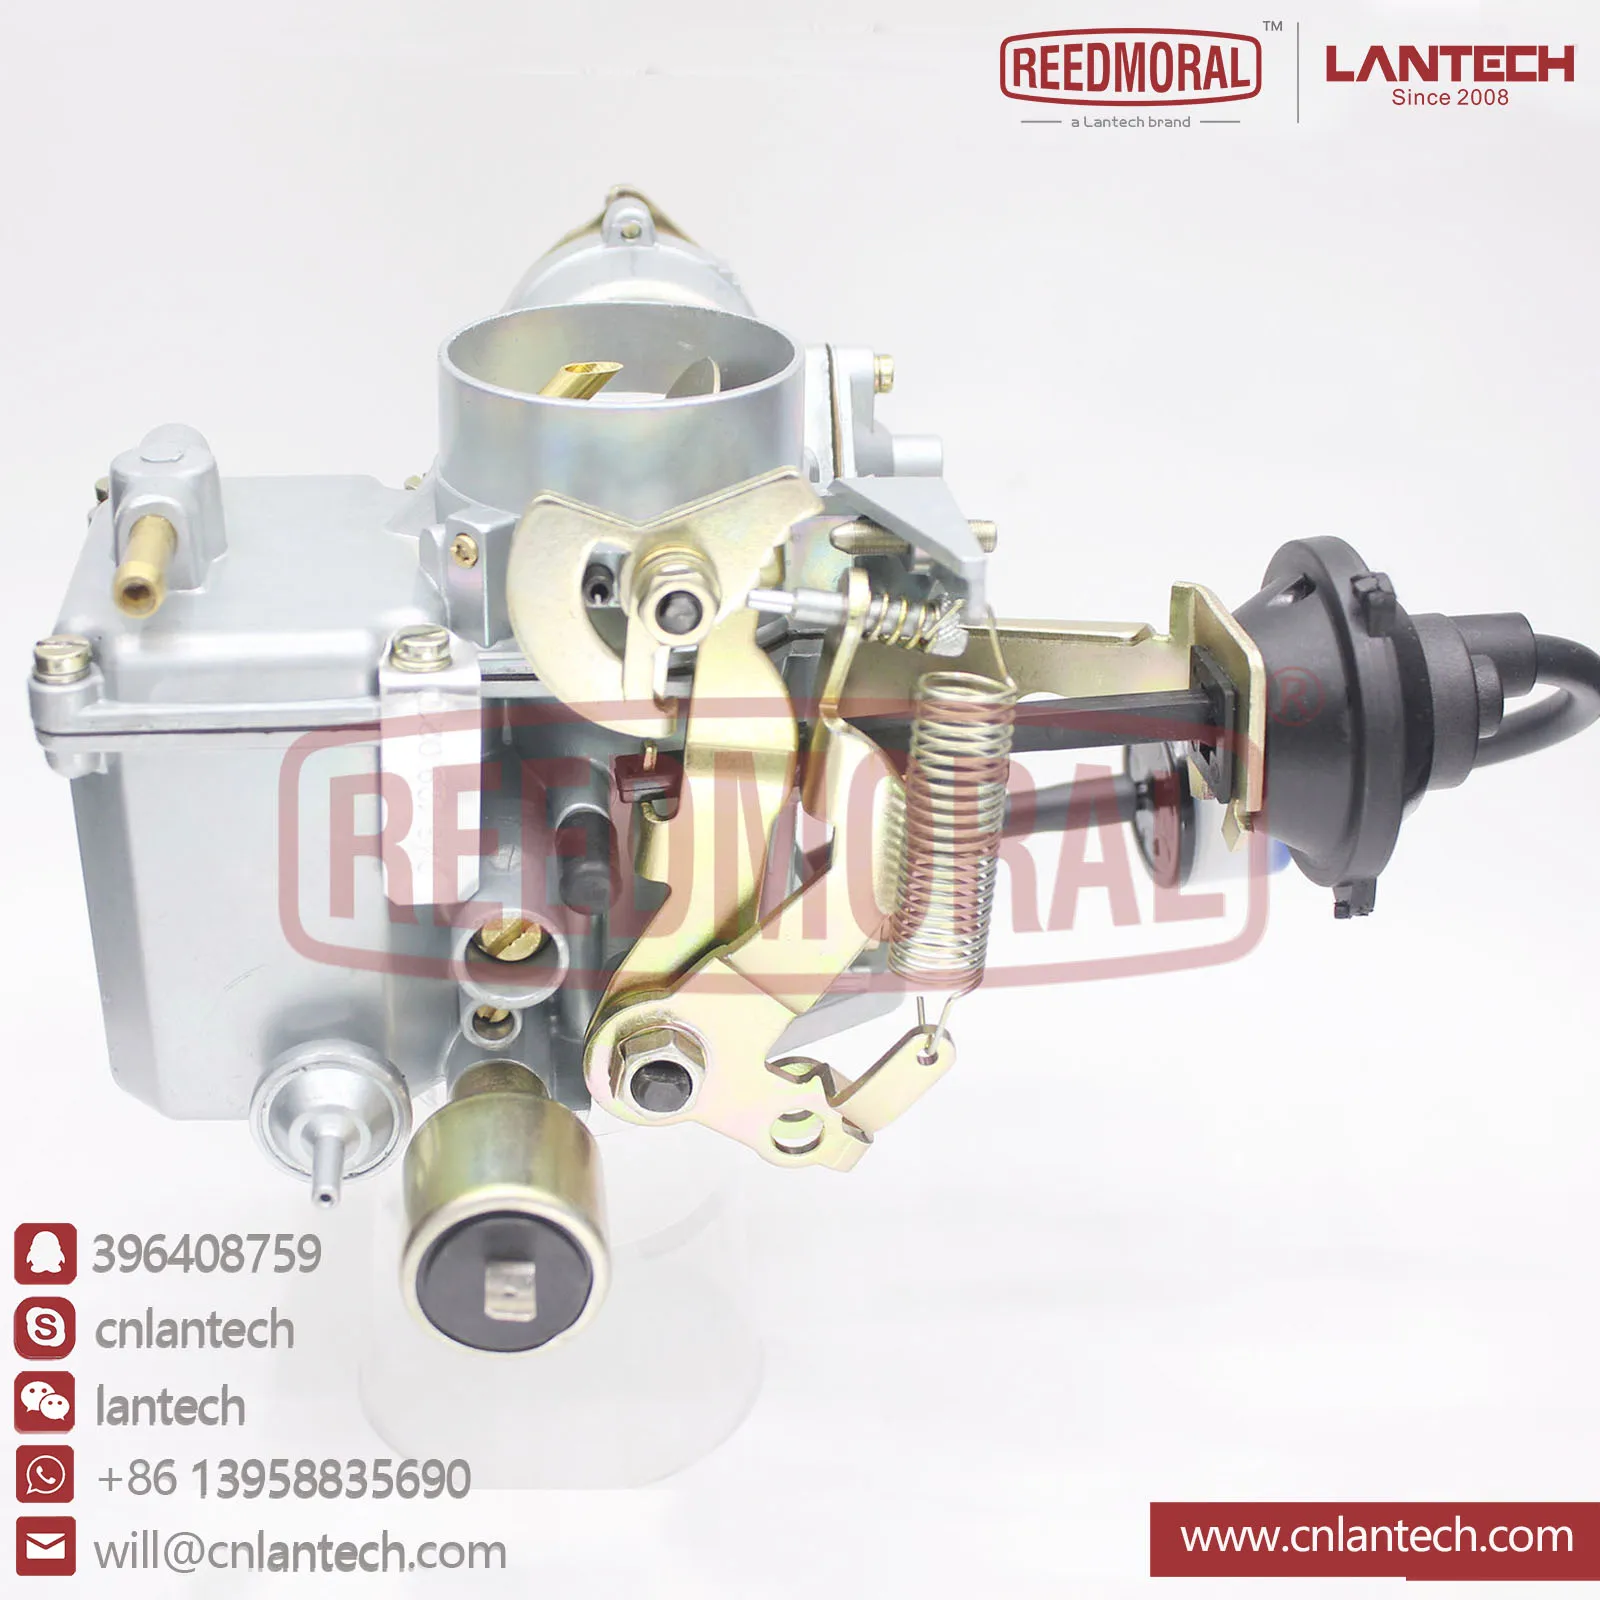 

LDH108A Carburetor Carburador forVW 34PICT-3 VOCHO Y COMBI 1600 CC 043 129 021D bocar carburadores